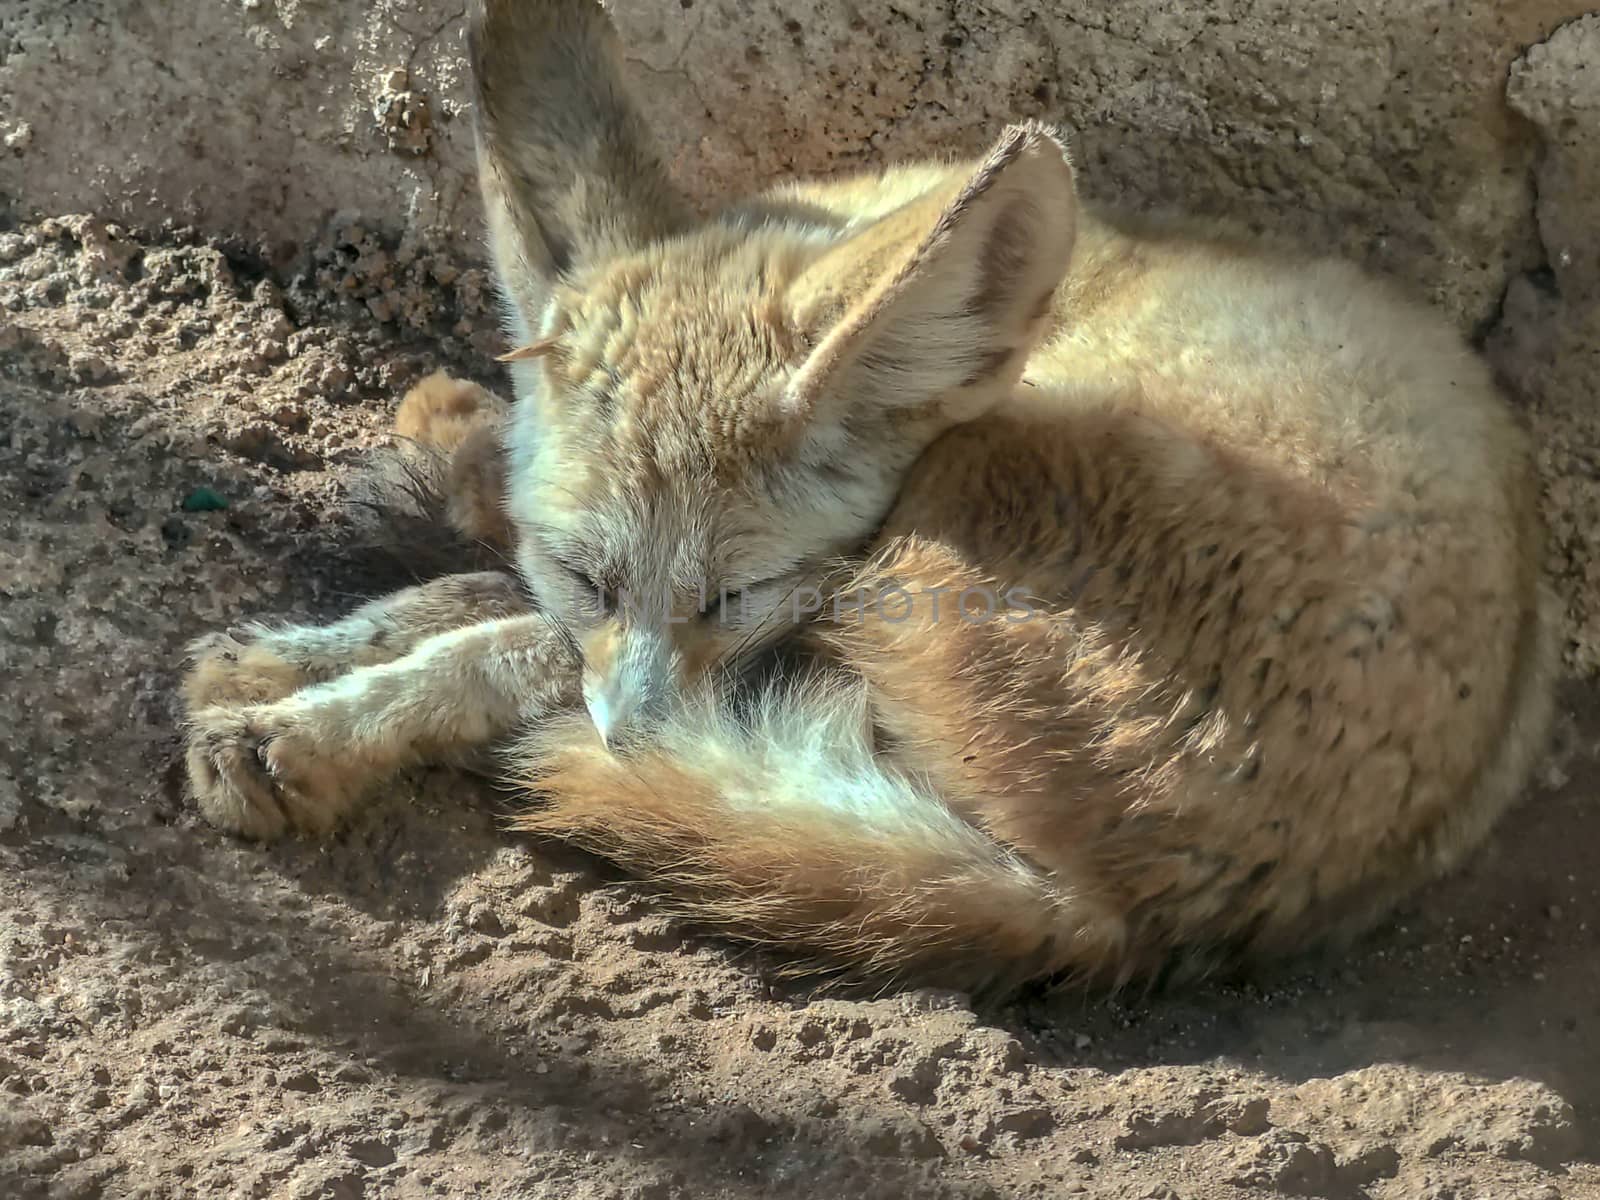 A fox sleeping quitely